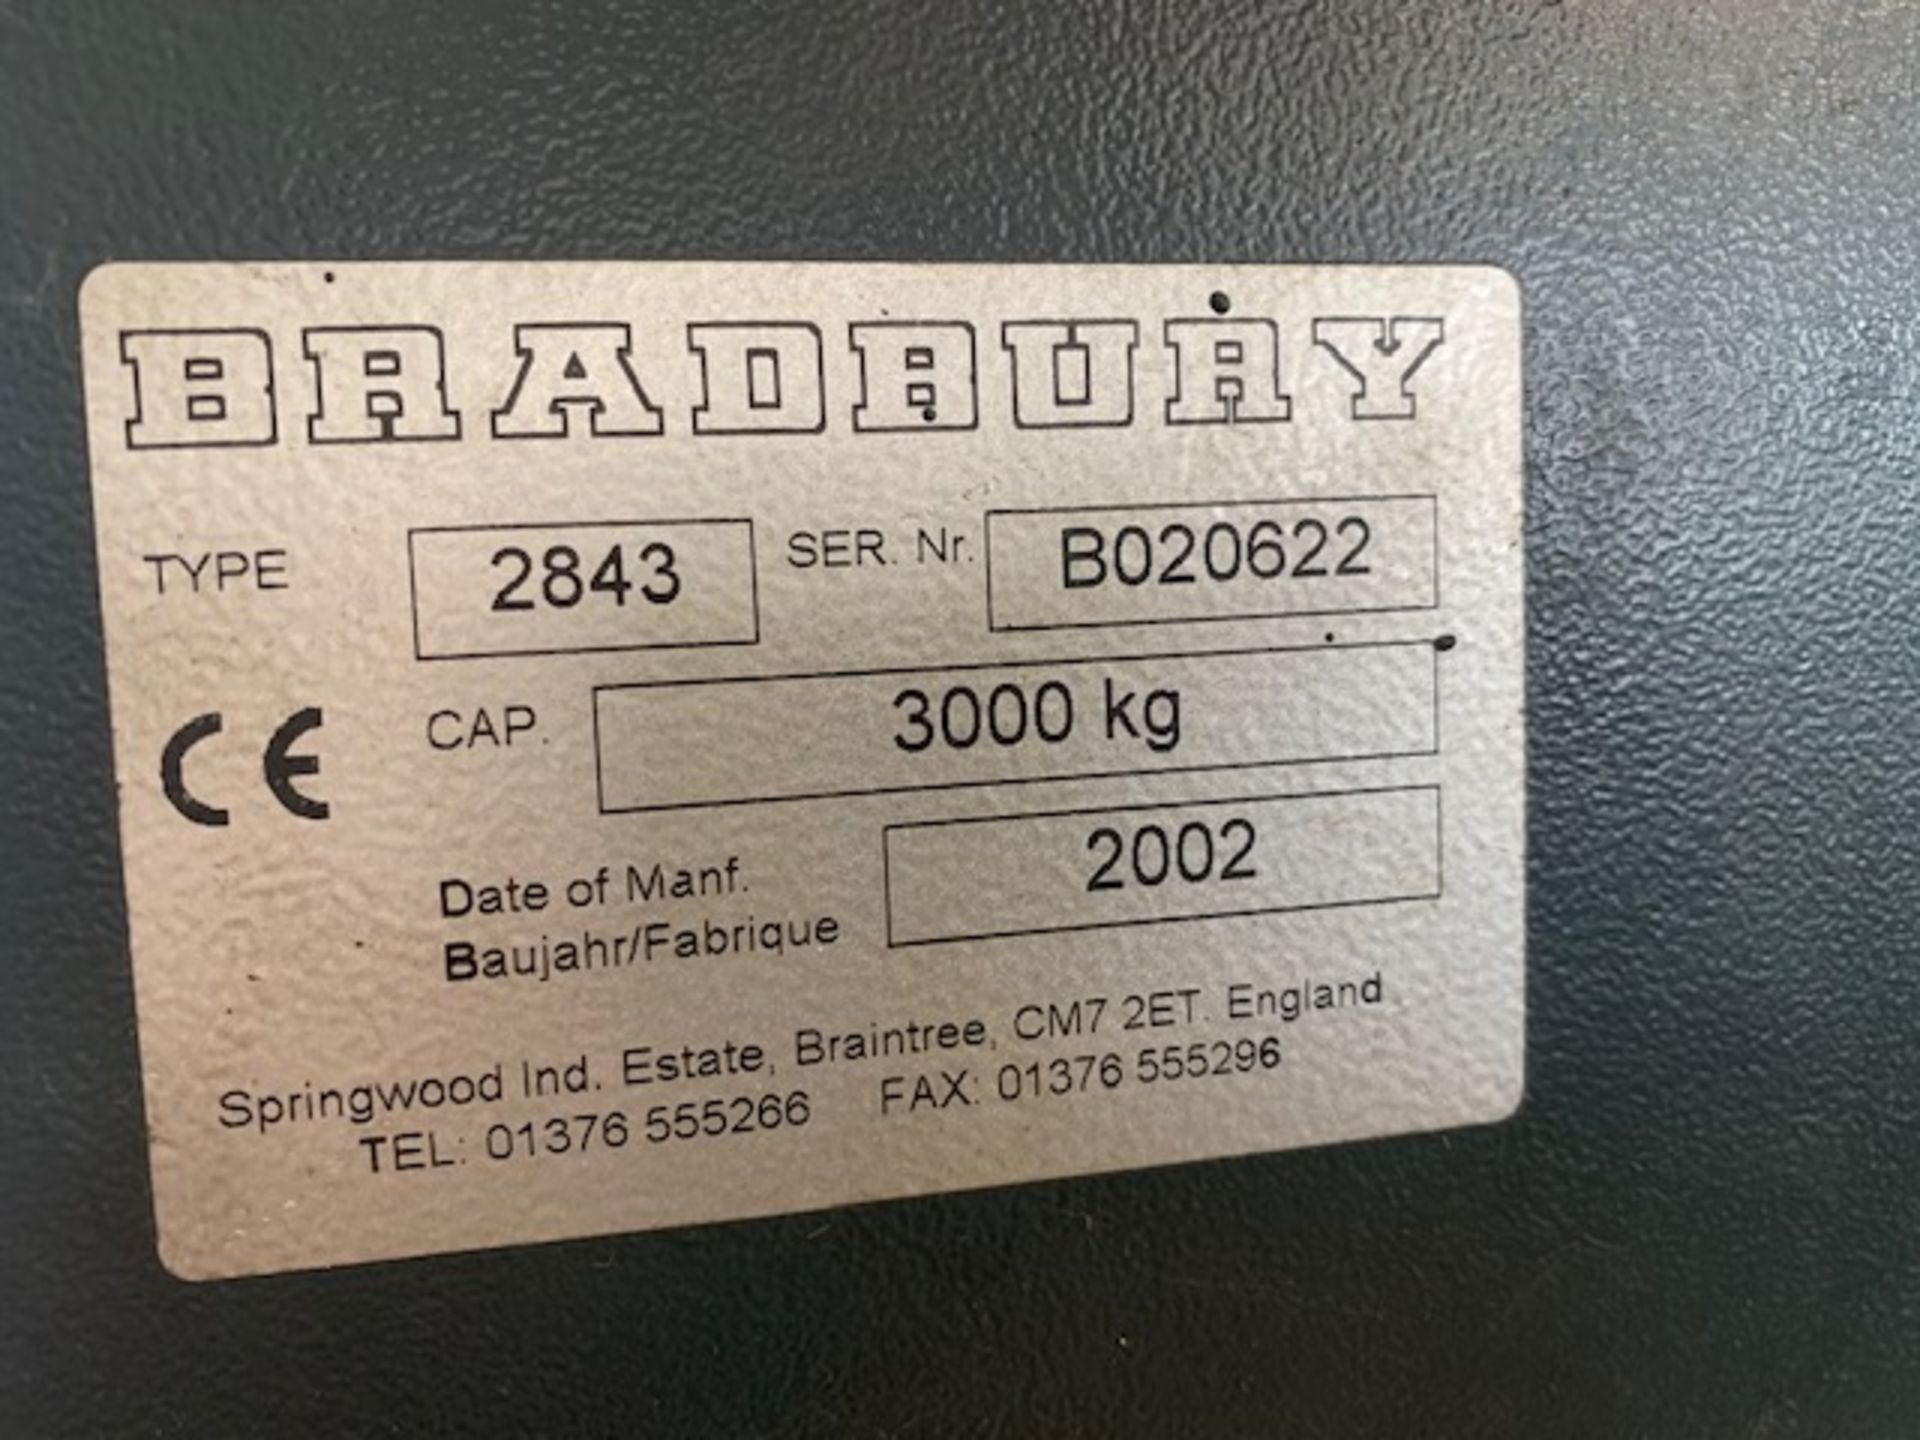 Bradbury 2-post vehicle lift 3000kg Type 2843 Serial No. 8020622 (2002). NB: This item has no record - Image 4 of 4